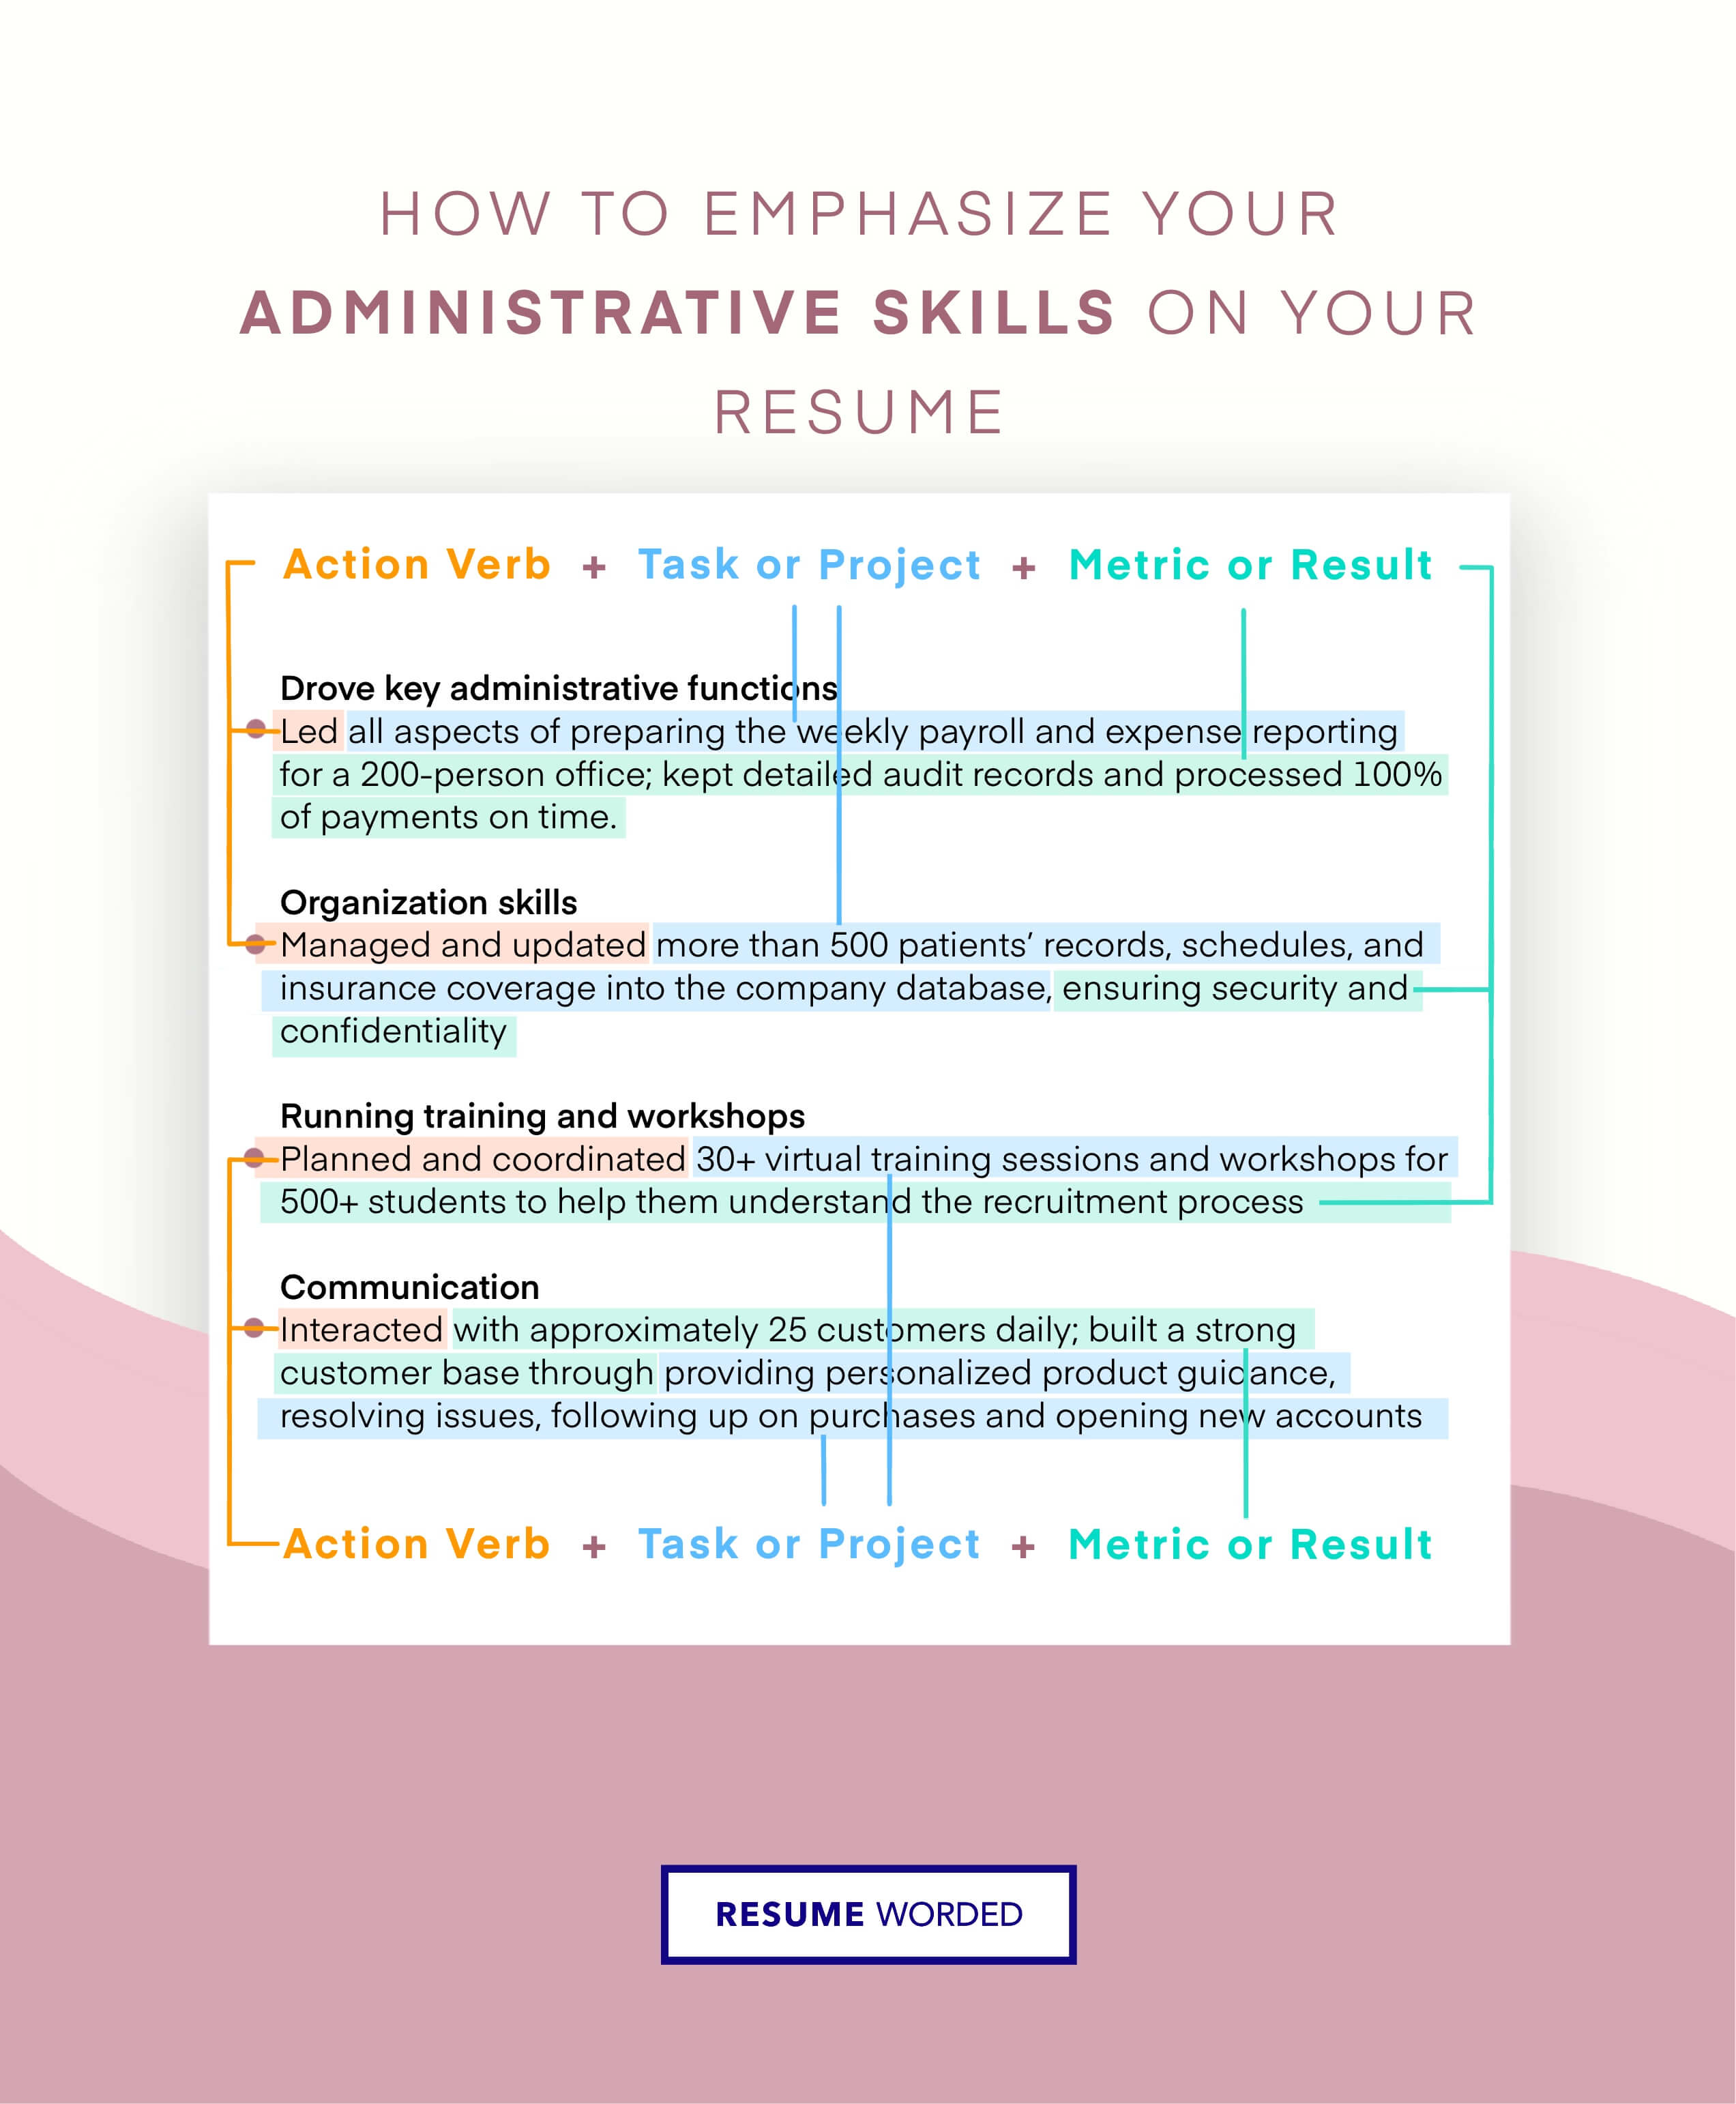 Highlight IT System Administrator skills - IT System Administrator Resume